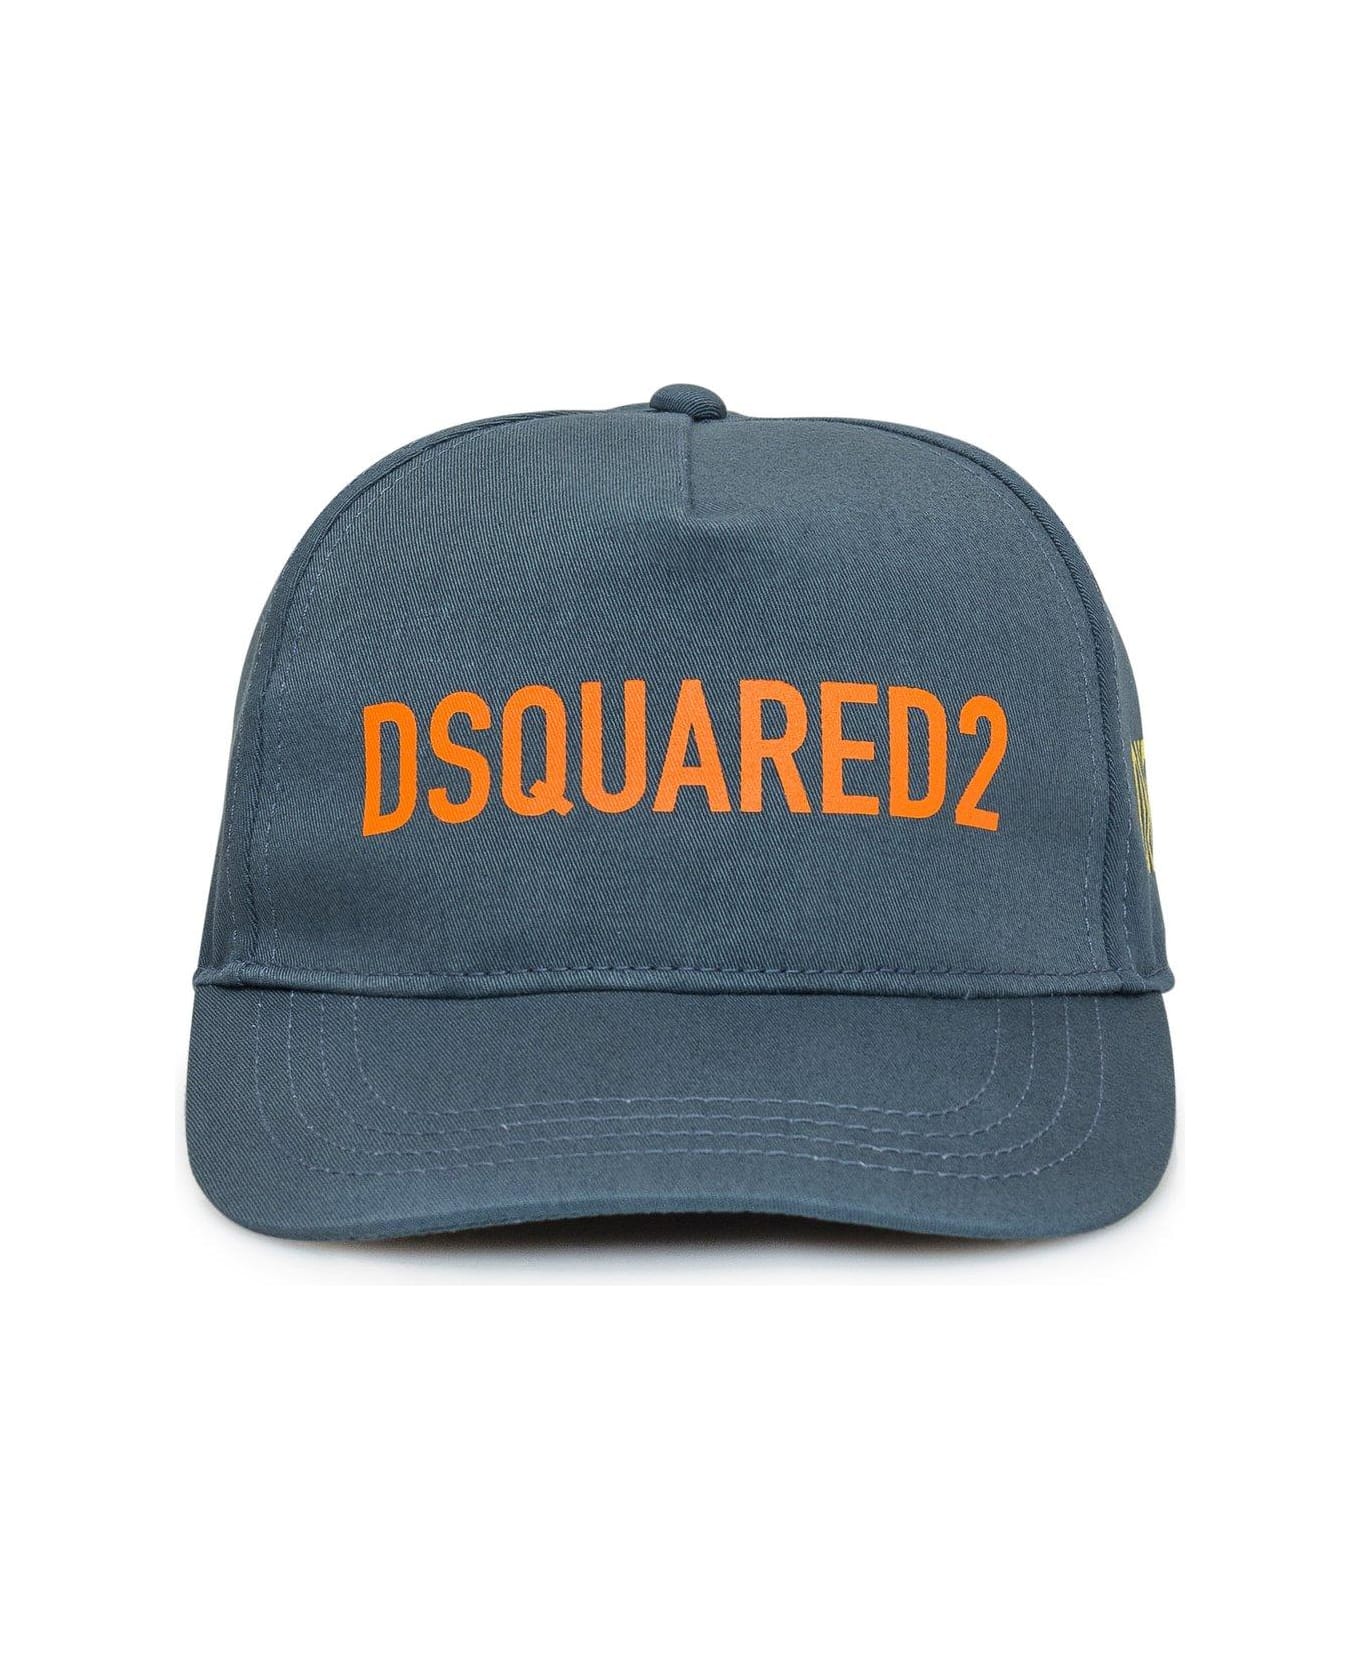 Dsquared2 One Life Logo Printed Baseball Cap - Green